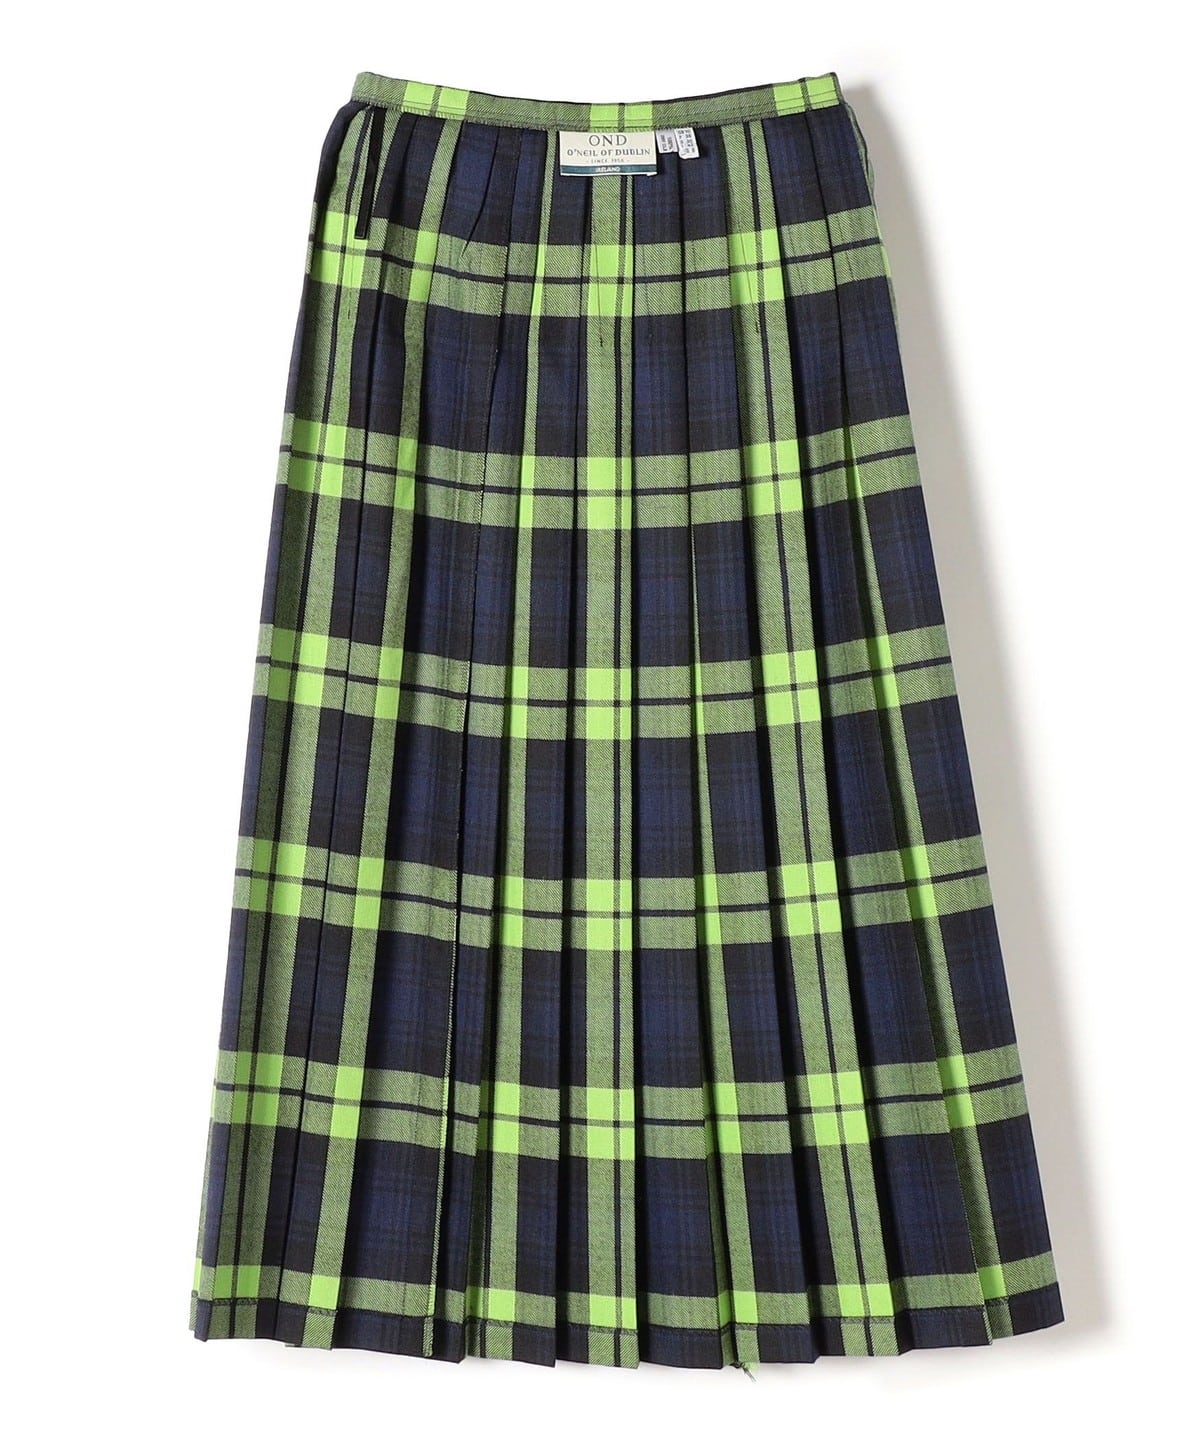 ONEIL OF DUBLIN:ファッション ロング キルト スカート◇: スカート